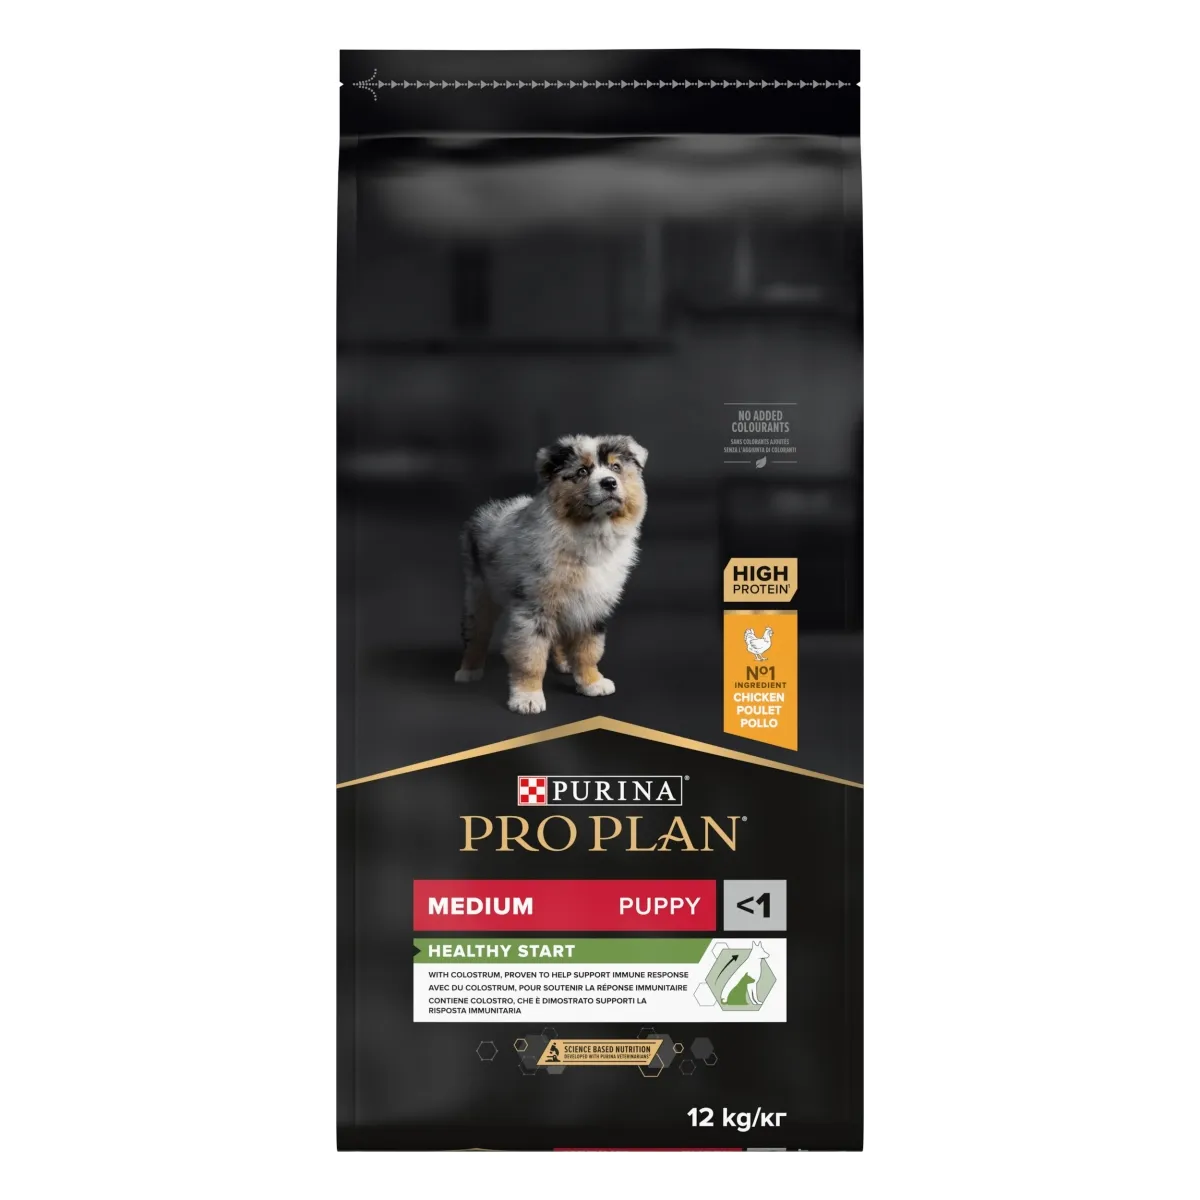 Purina PRO PLAN Medium Puppy with OPTISTART®, 12kg